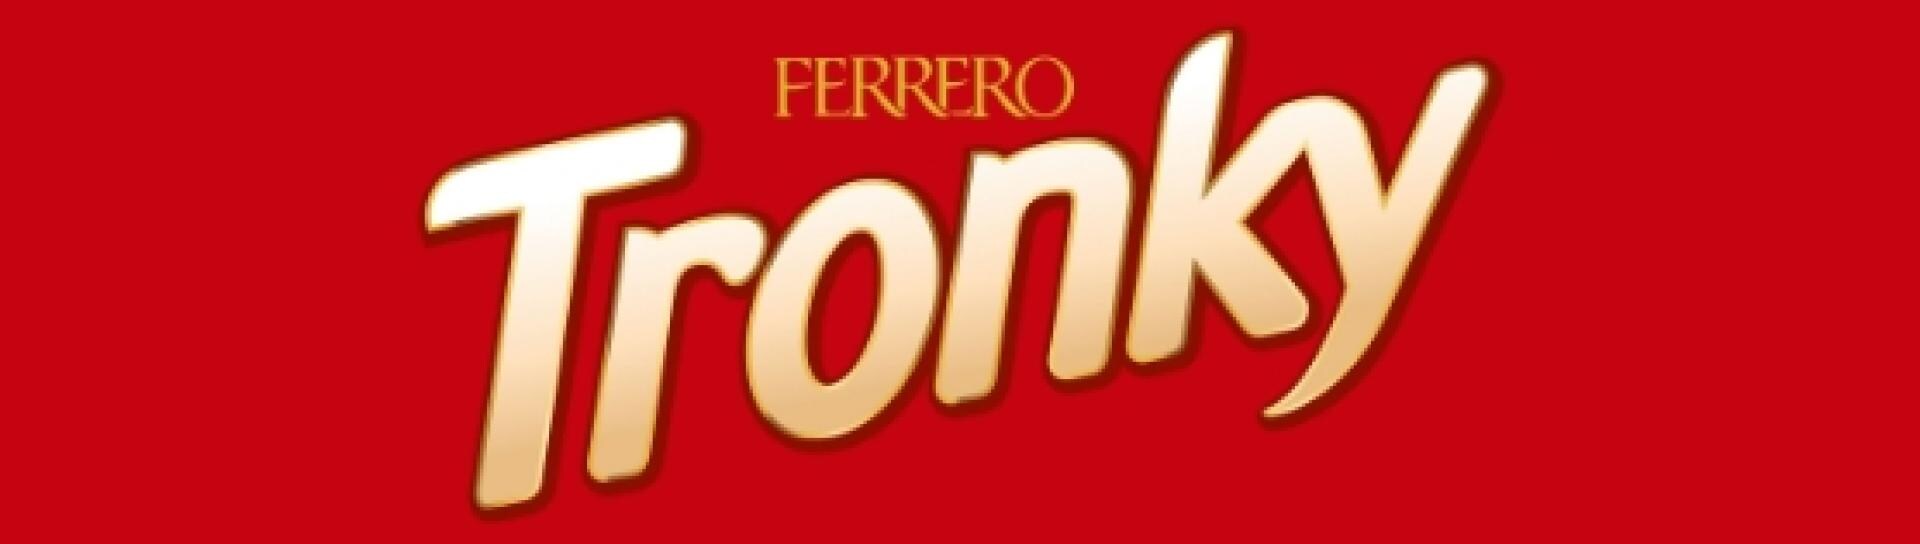 Ferrero Tronky